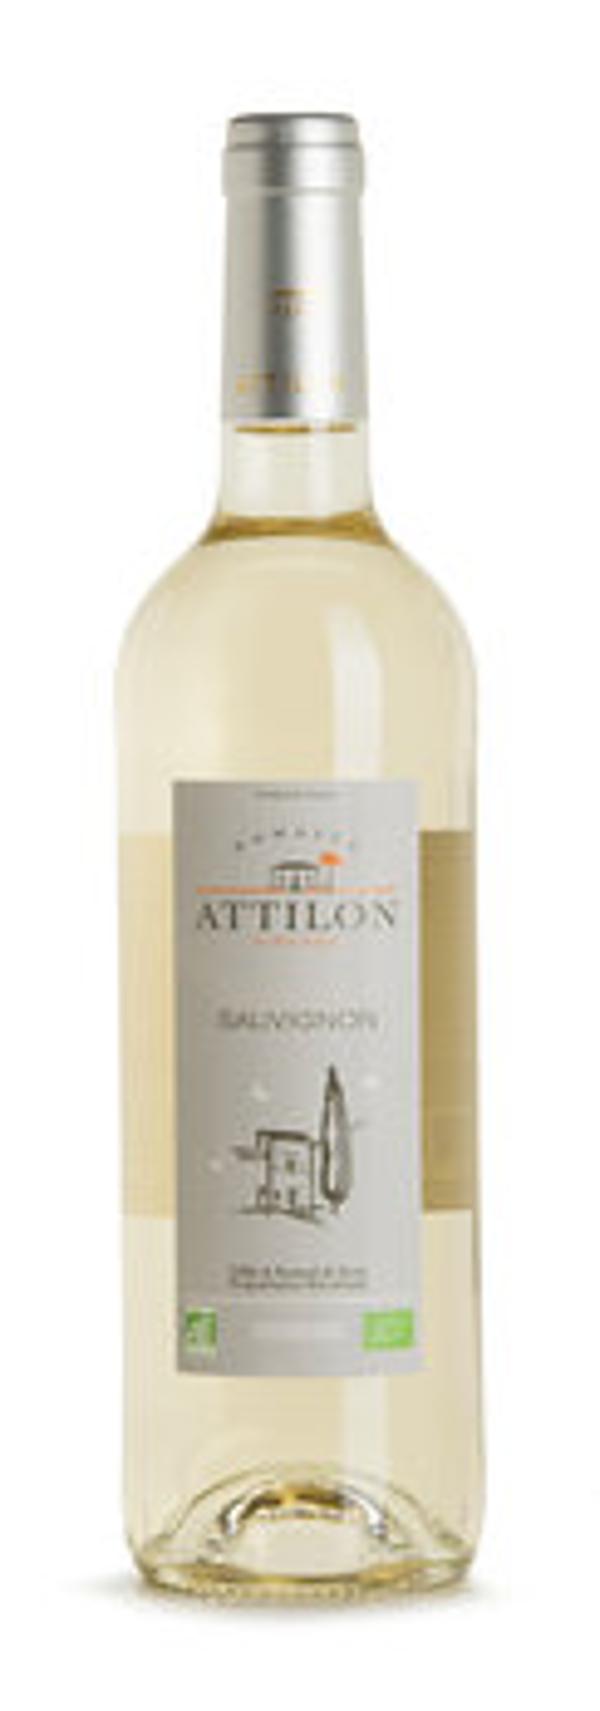 Produktfoto zu Sauvignon blanc Attilon, weiß